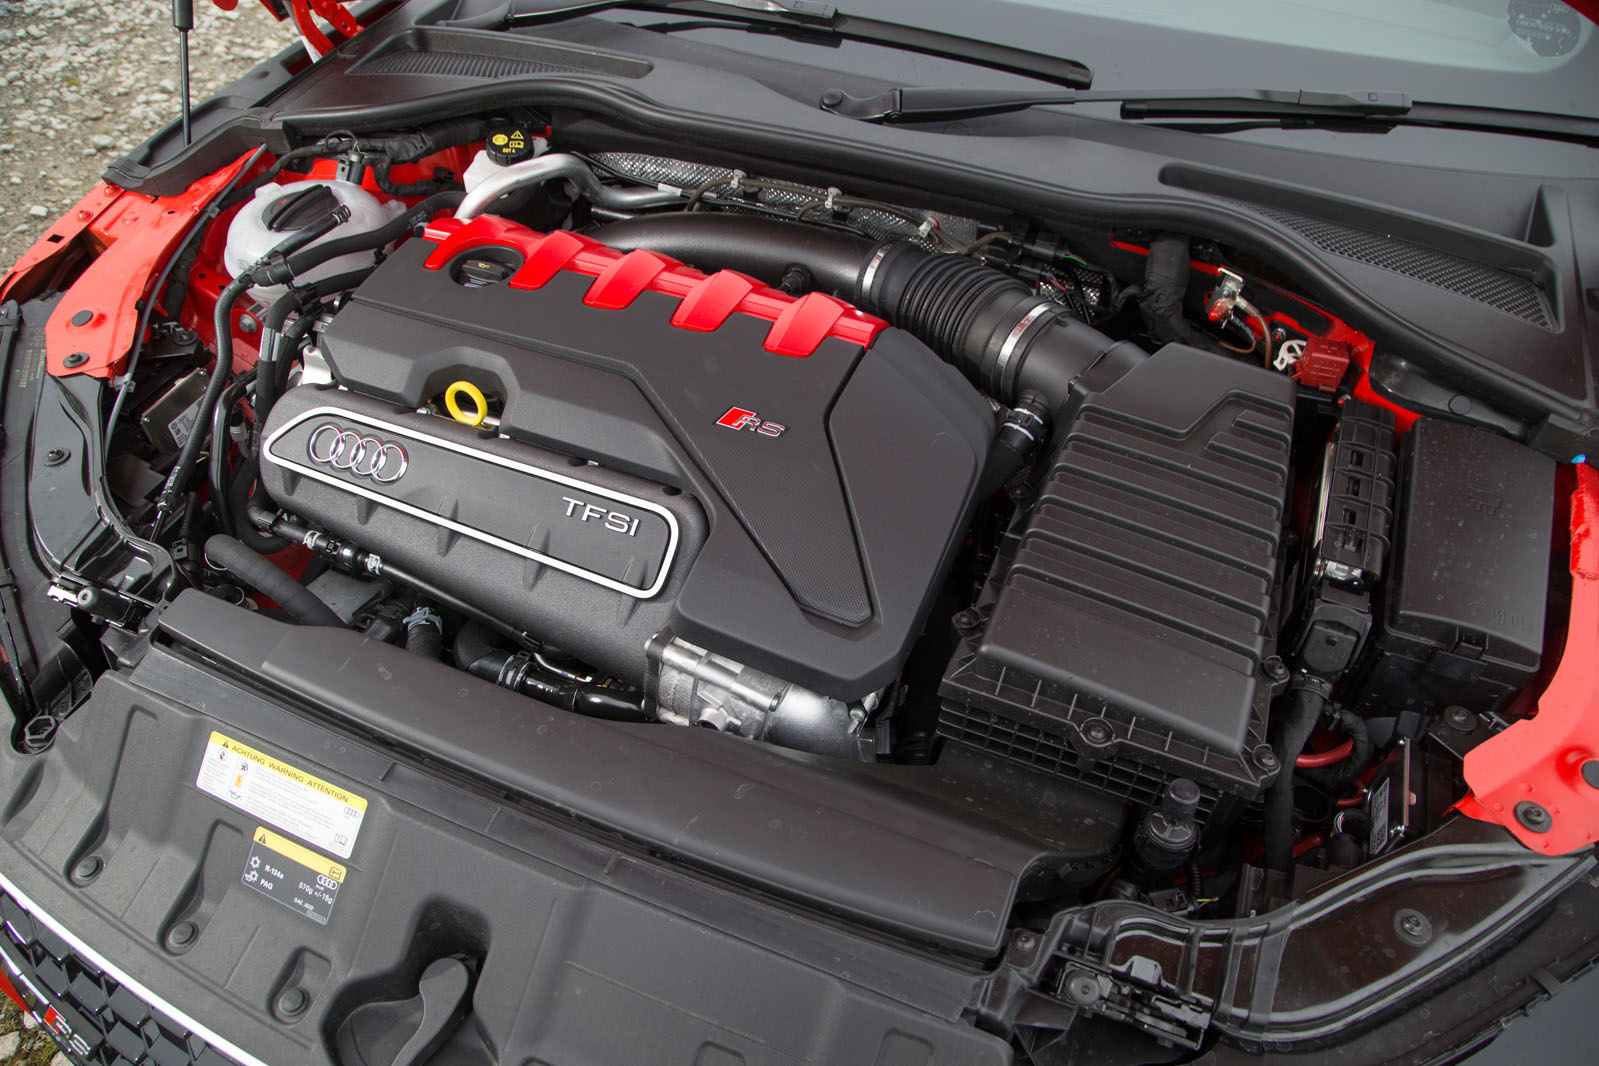 2.5-litre TFSI Audi TT RS engine